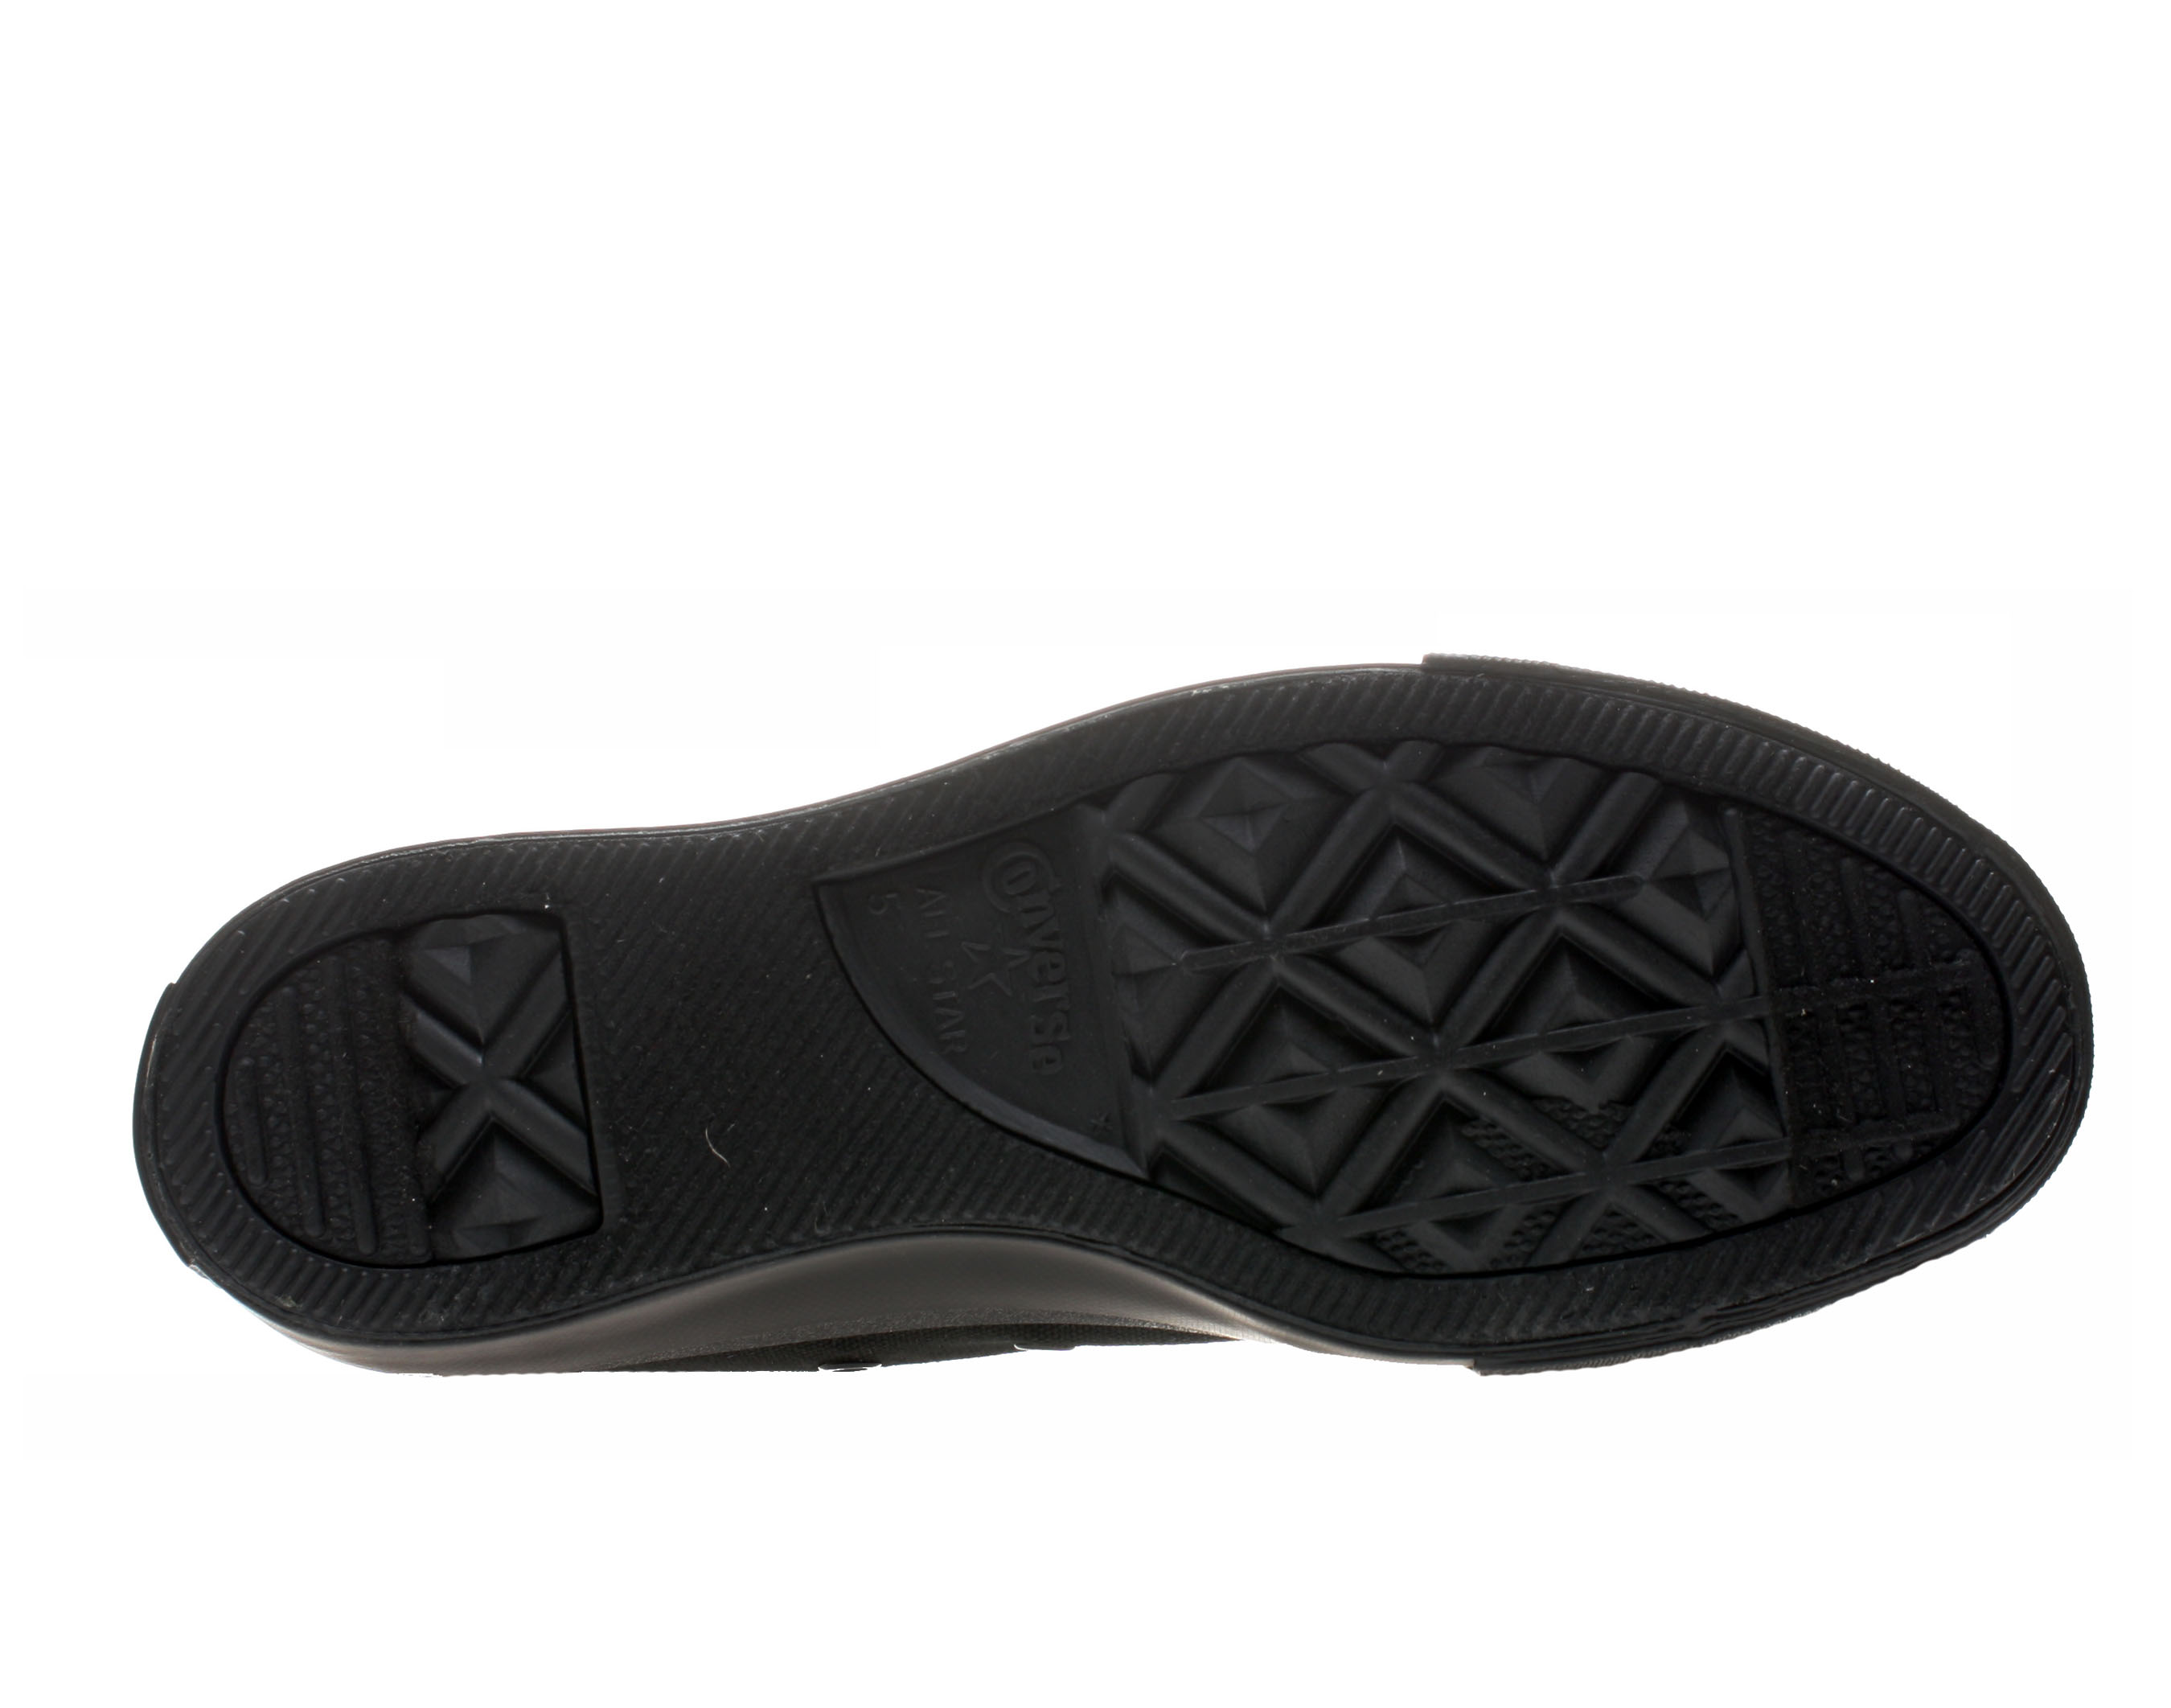 CONVERSE All Star Black Mono Low Top Chuck Taylor Men Women Shoes Sneaker - image 5 of 6